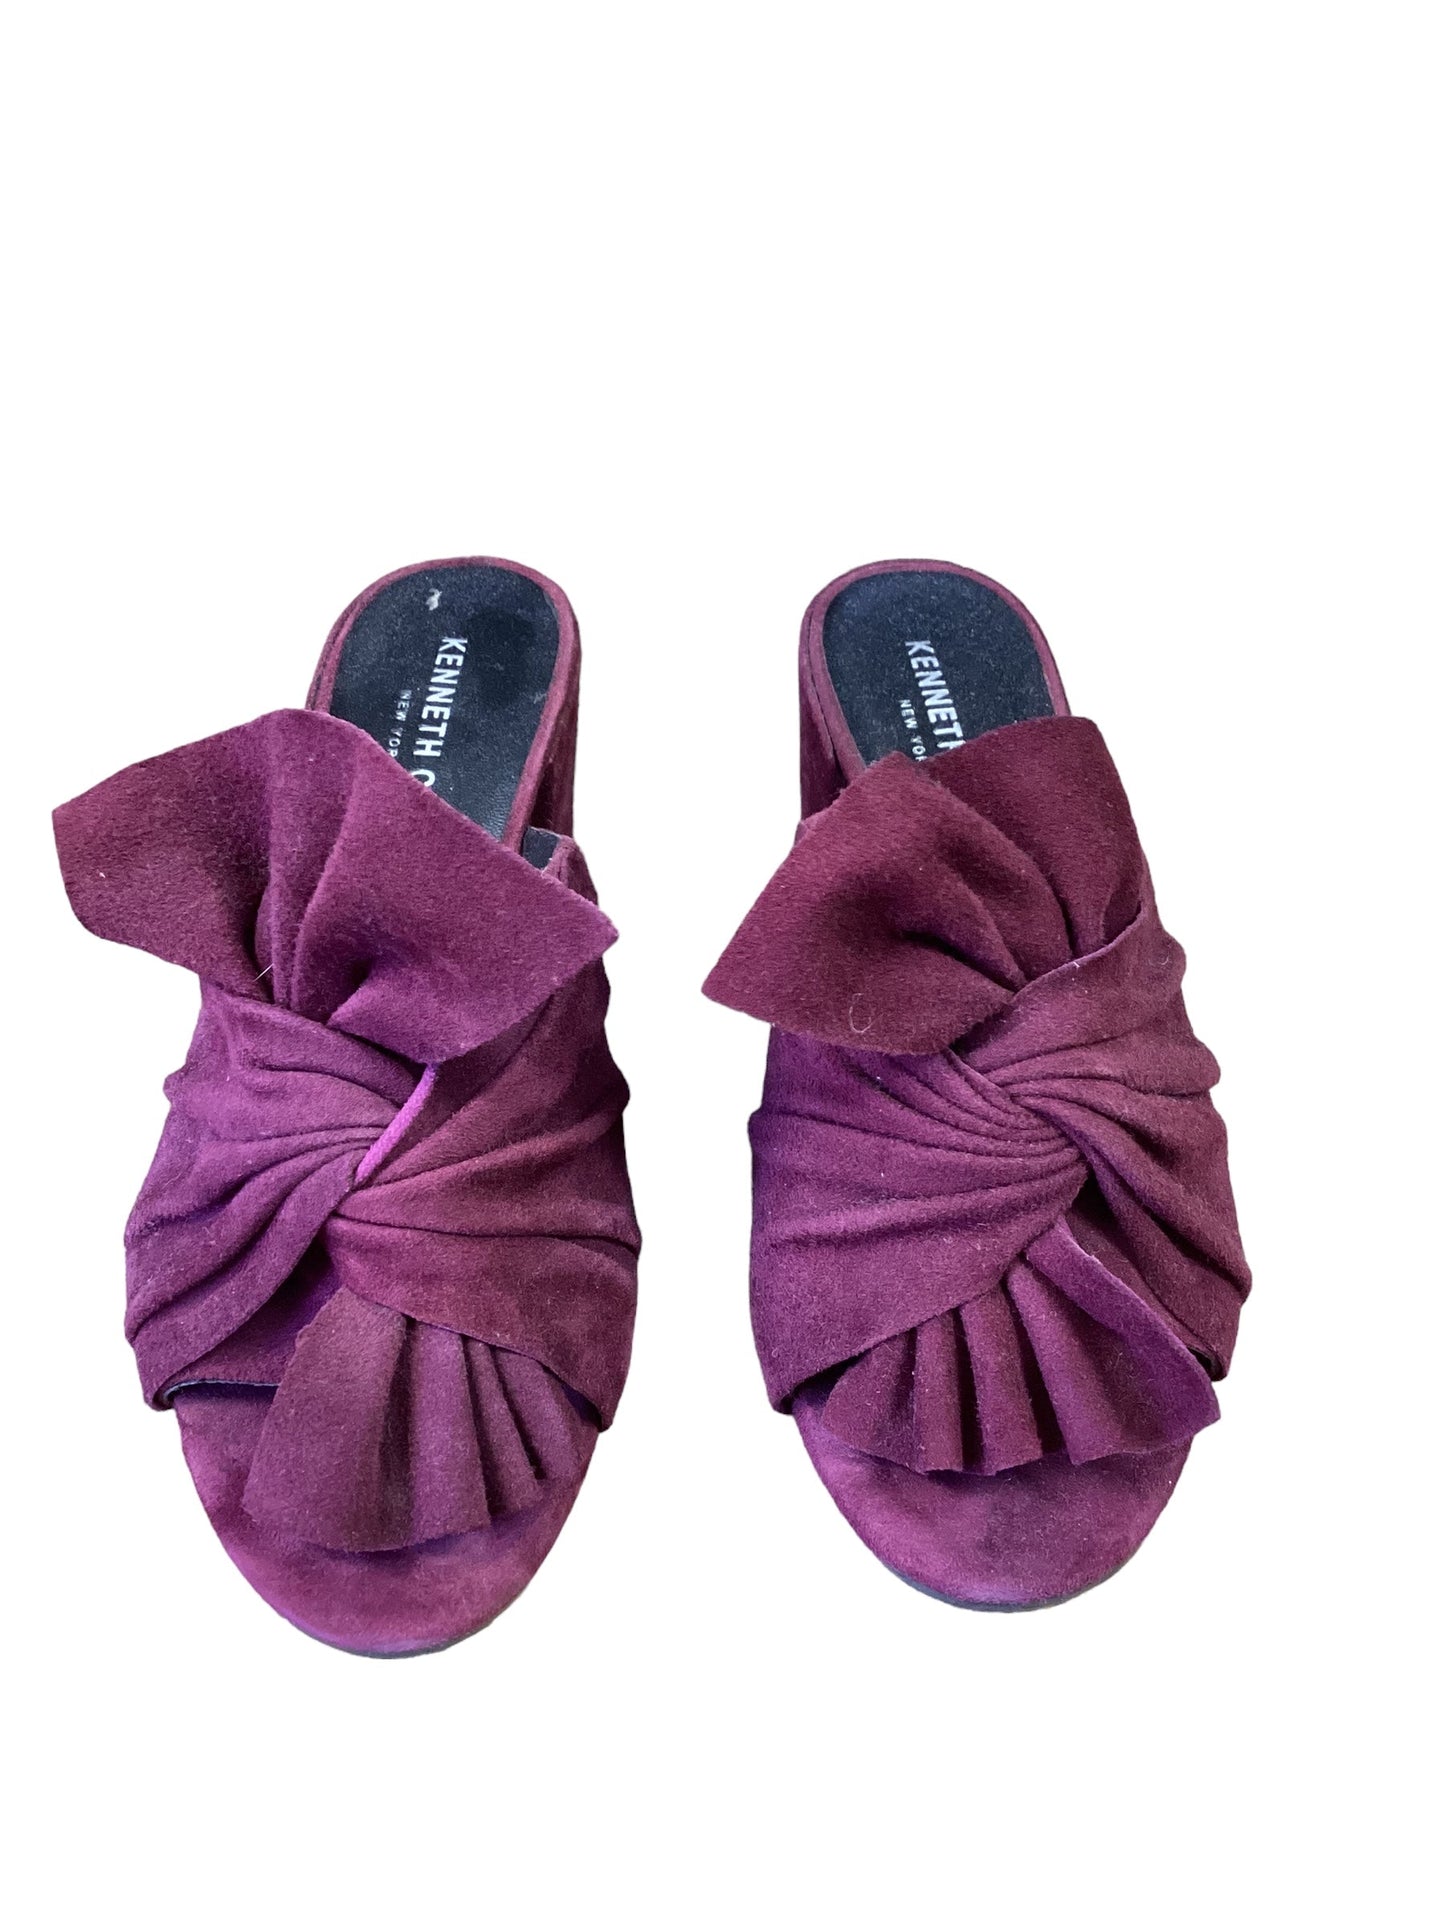 Purple Shoes Heels Block Kenneth Cole, Size 6